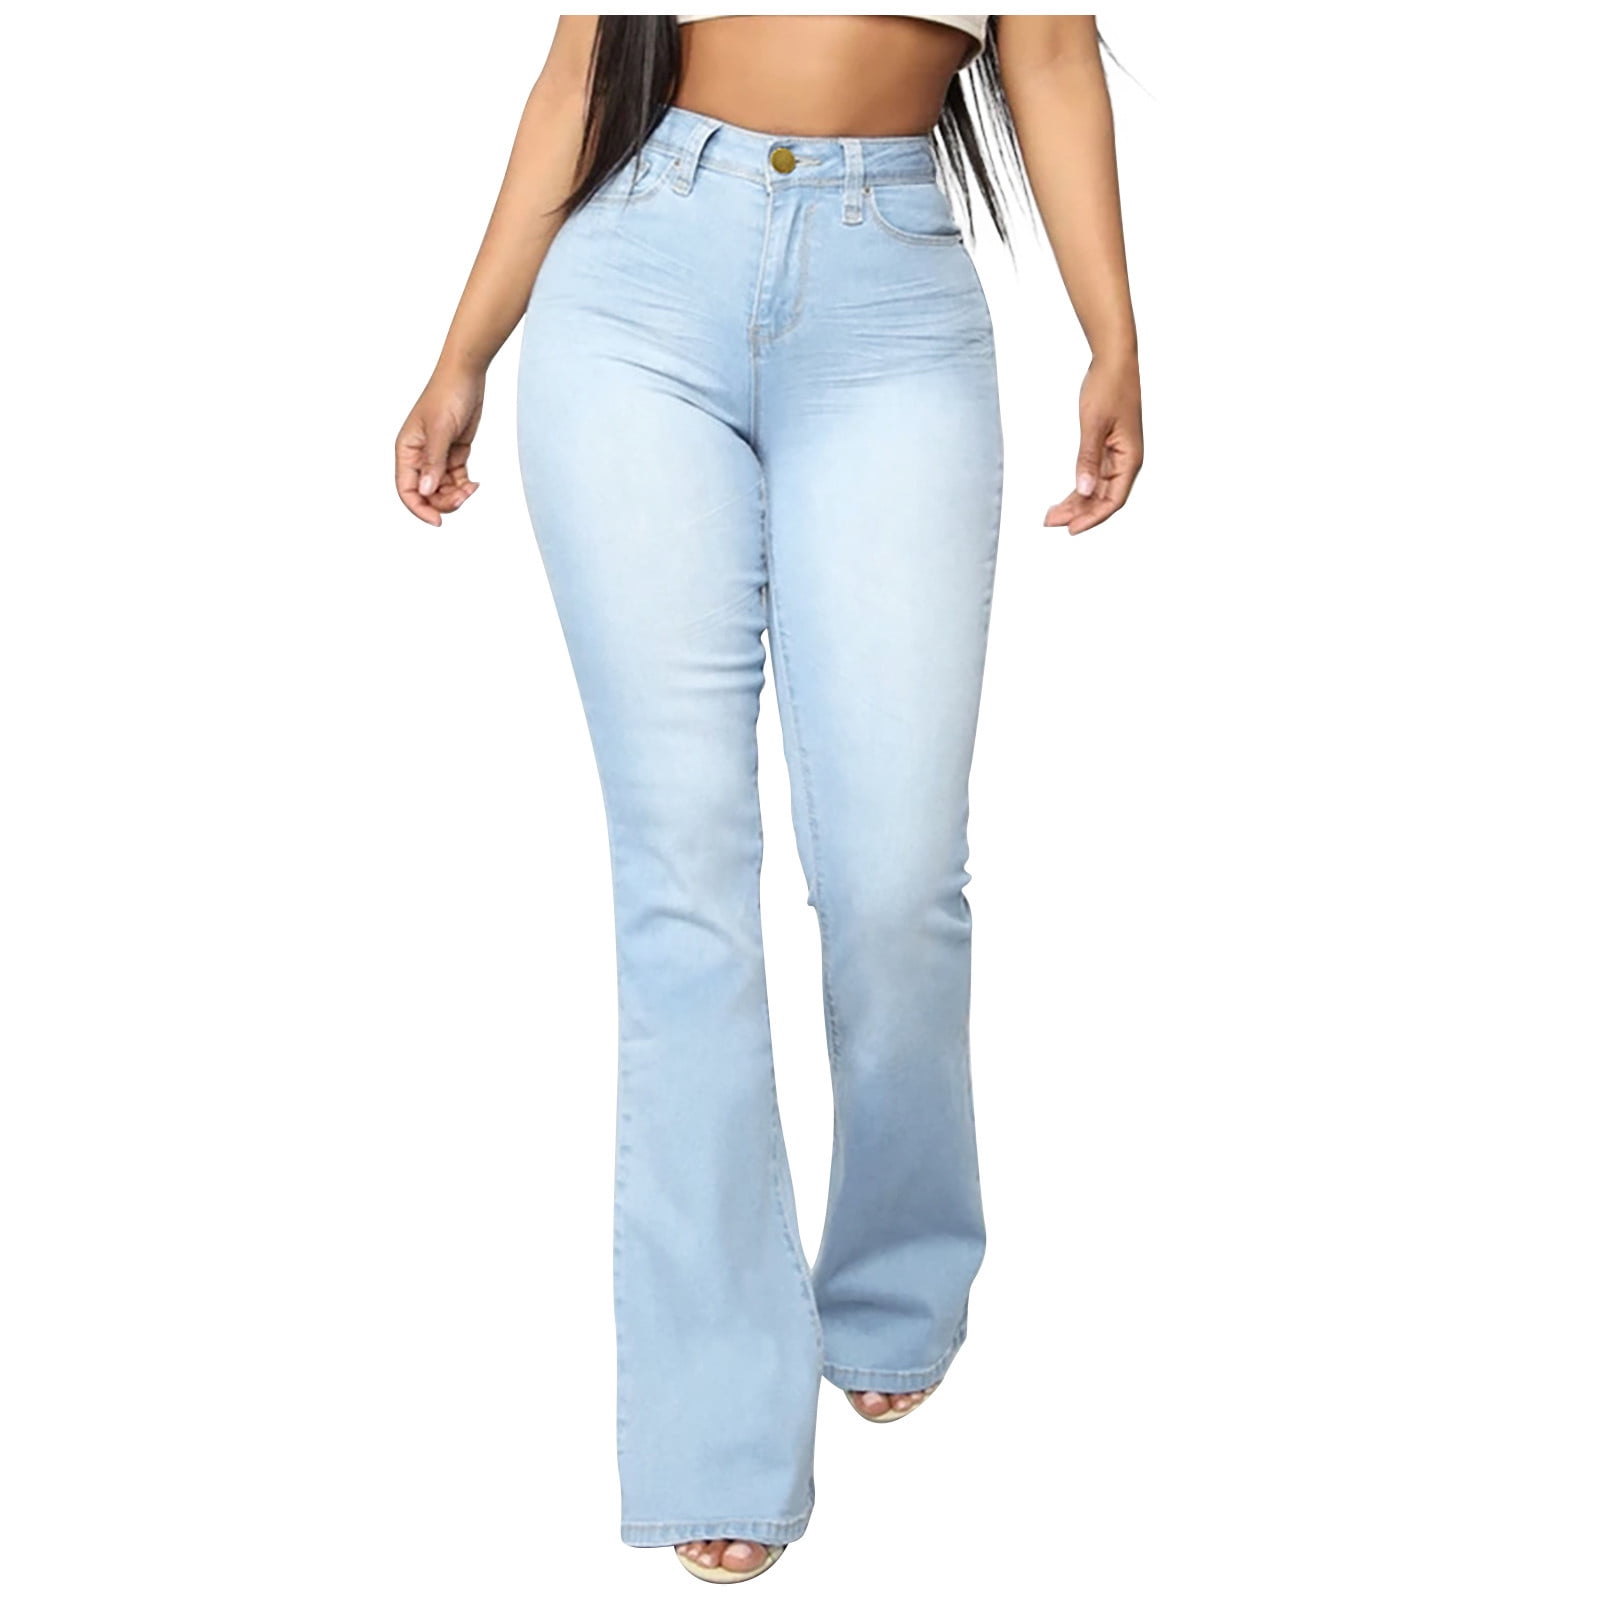 Vetinee Stretch High Rise Girlfriend Denim Jeans for Women Girls Casual  Summer Fall Bell Bottom Pants Size XL Size 16 Size 18